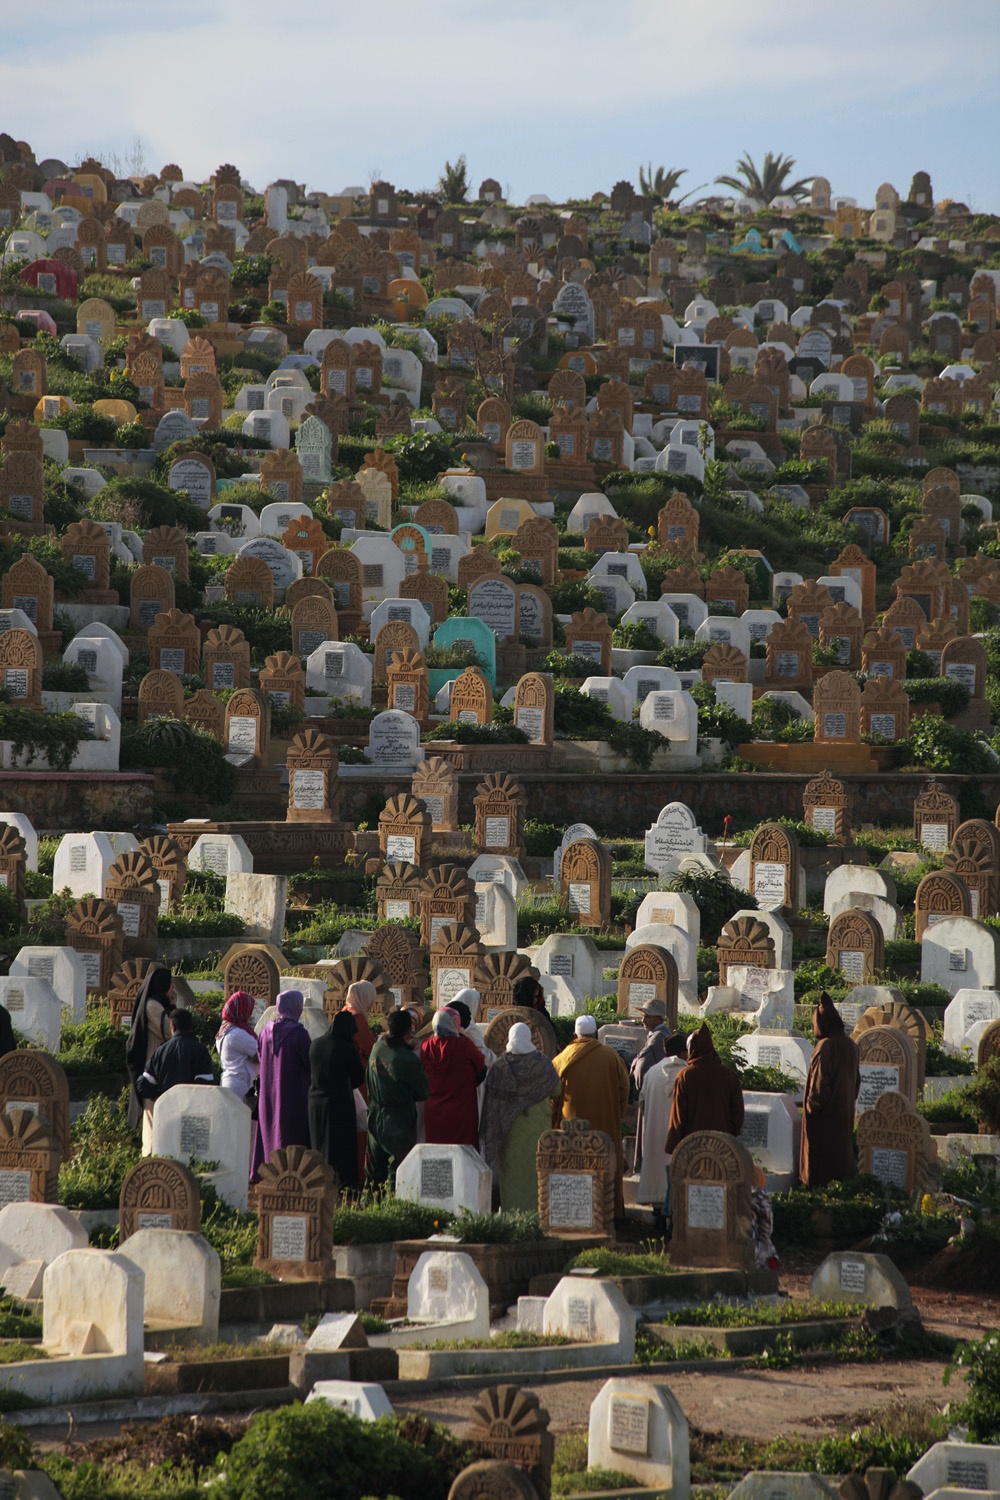 bill-hocker-cemetery-rabat-morocco-2013